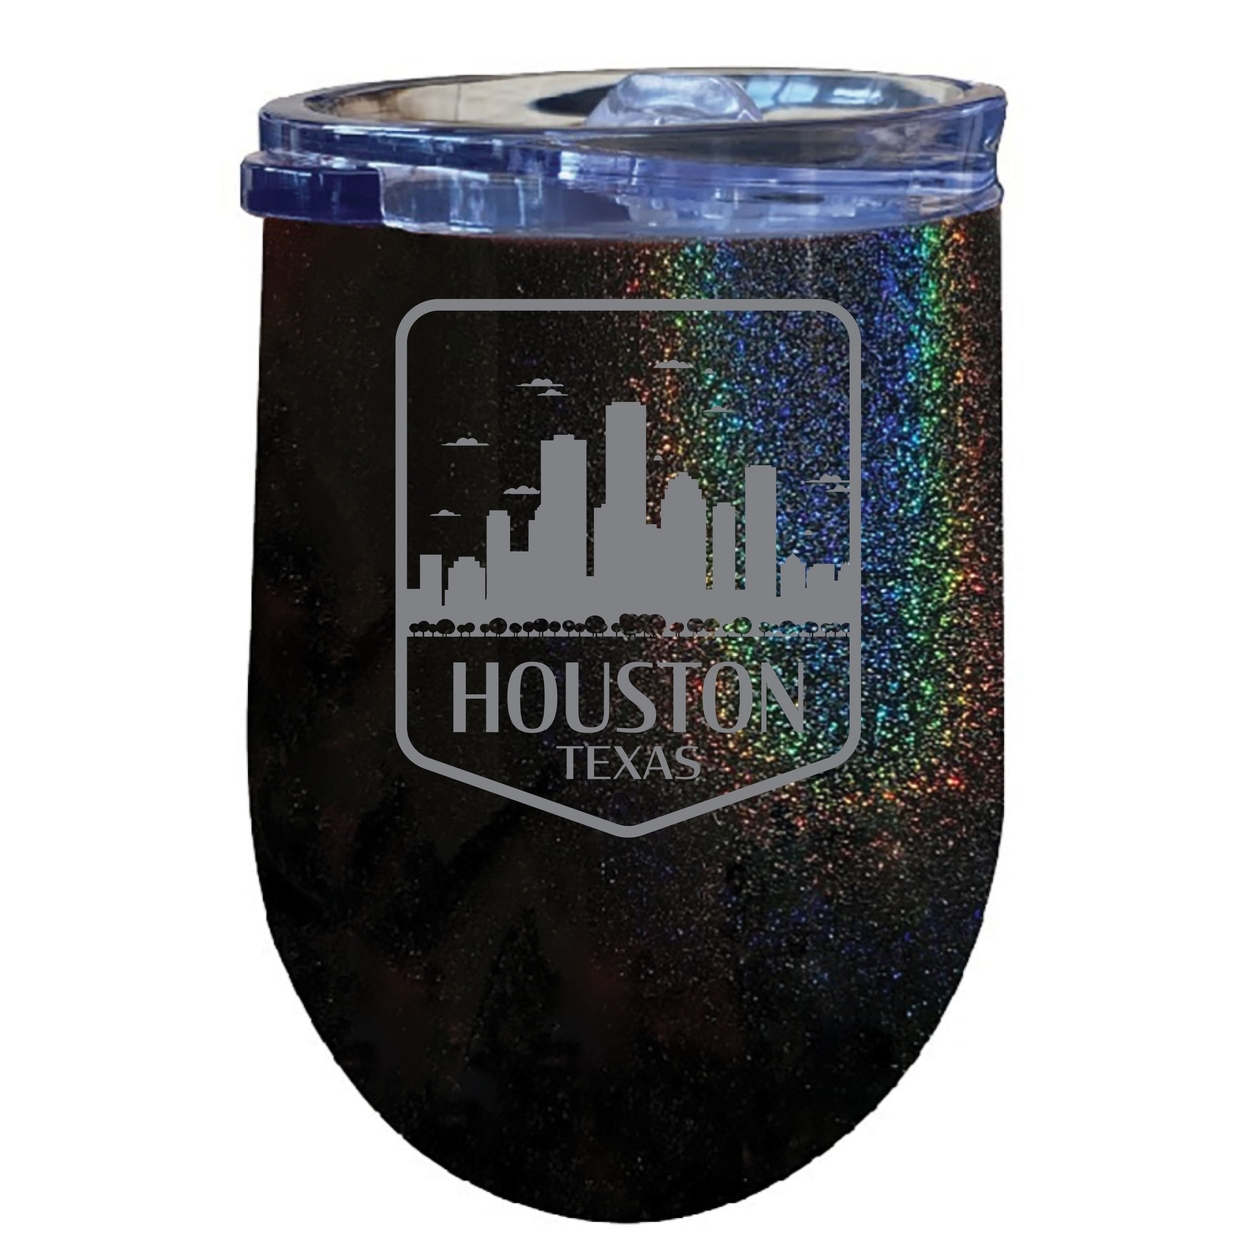 Houston Texas Souvenir 12 Oz Engraved Insulated Wine Stainless Steel Tumbler - Black,,4-Pack